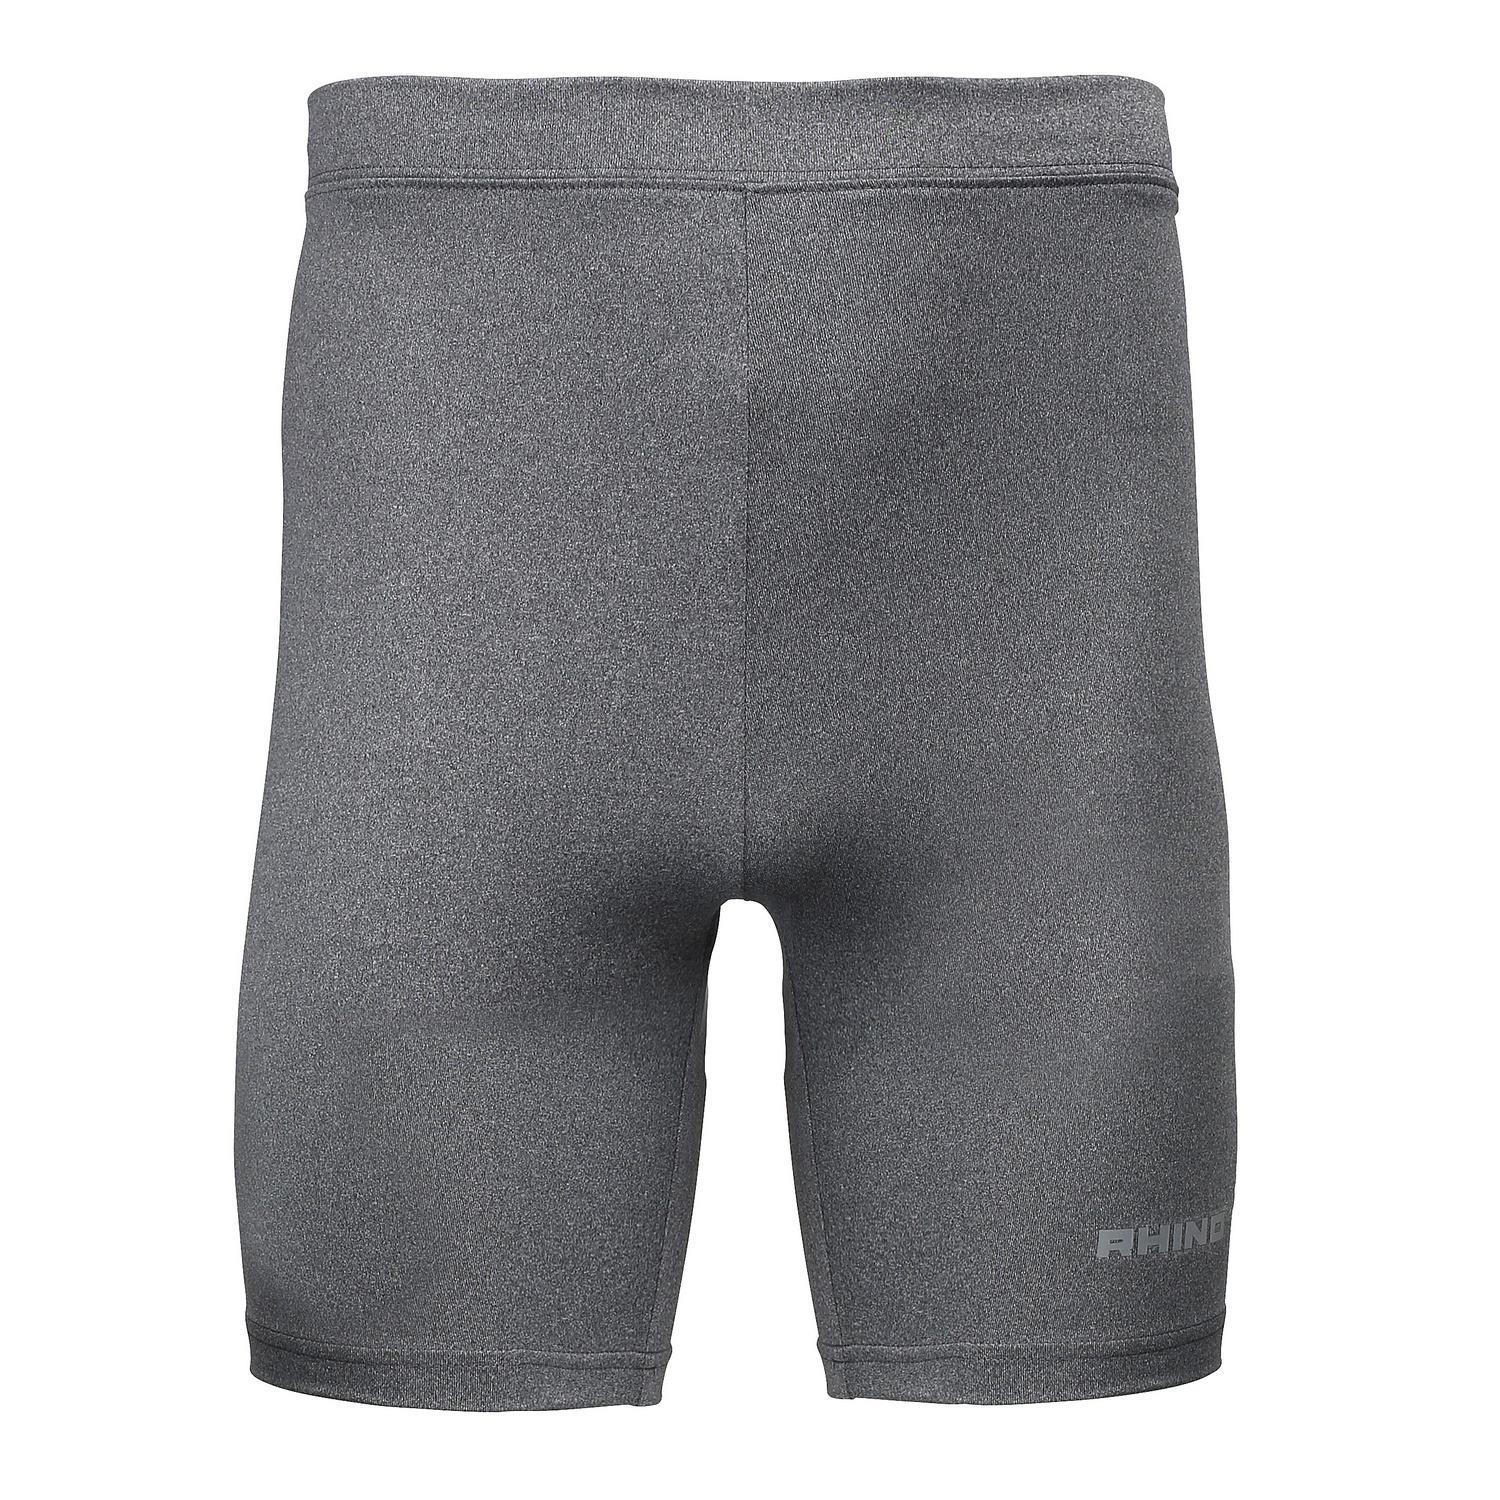 Rhino Childrens Boys Thermal Underwear Sports Base Layer Shorts (Heather Grey) (SY-MY)